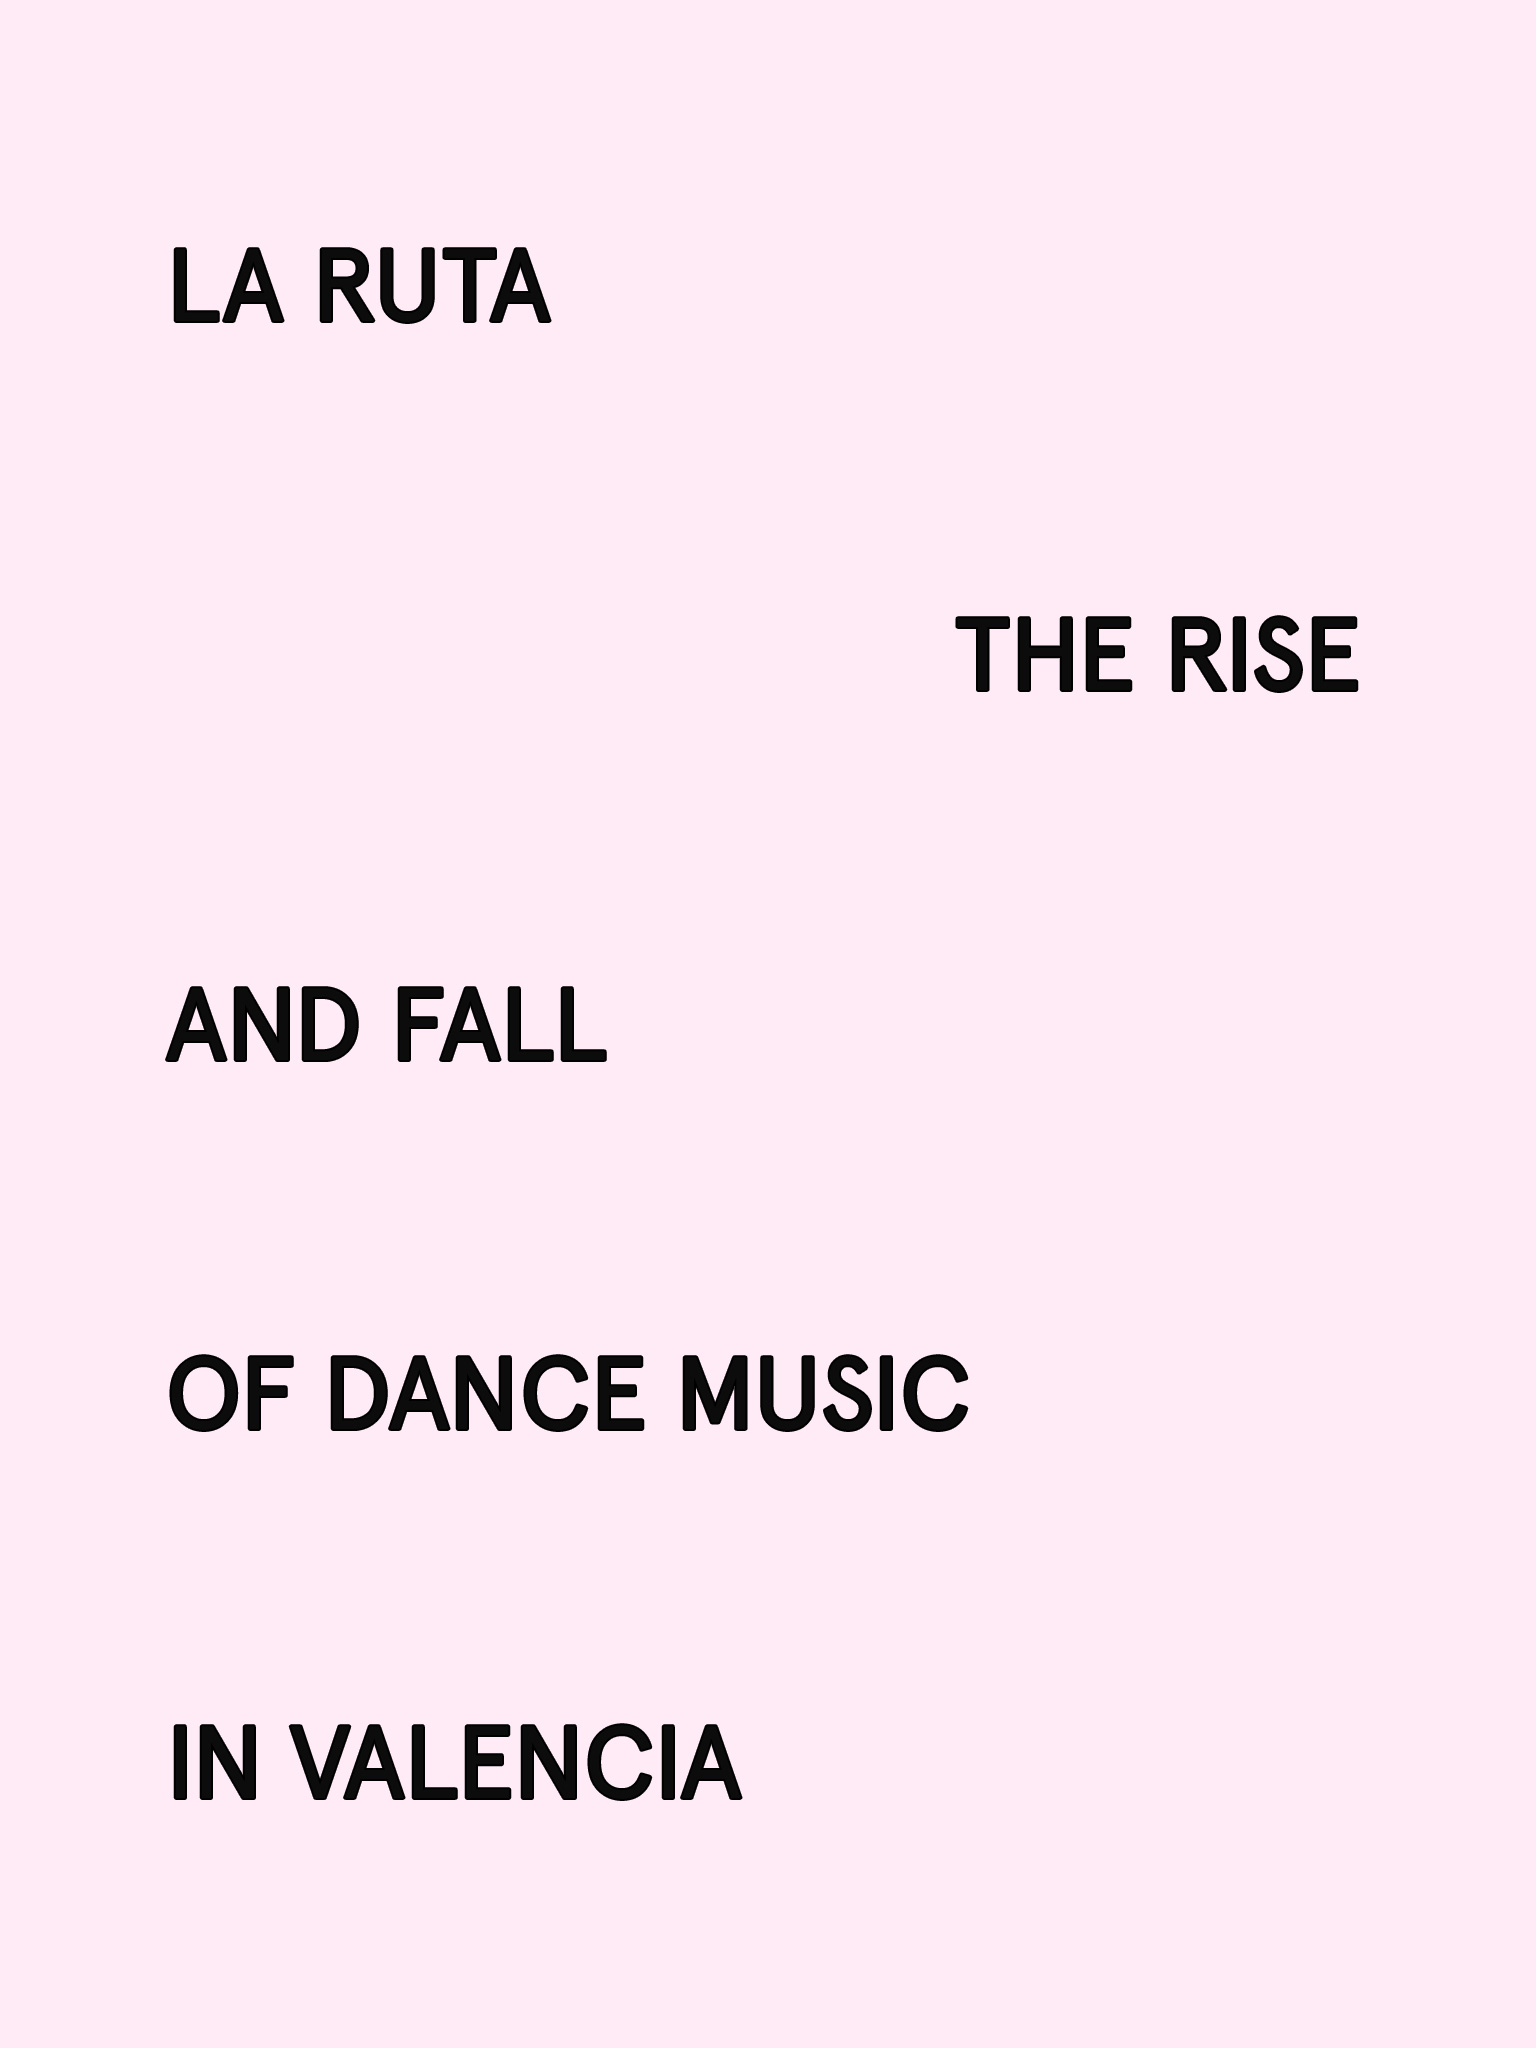 Ra La Ruta The Rise And Fall Of Dance Music In Valencia